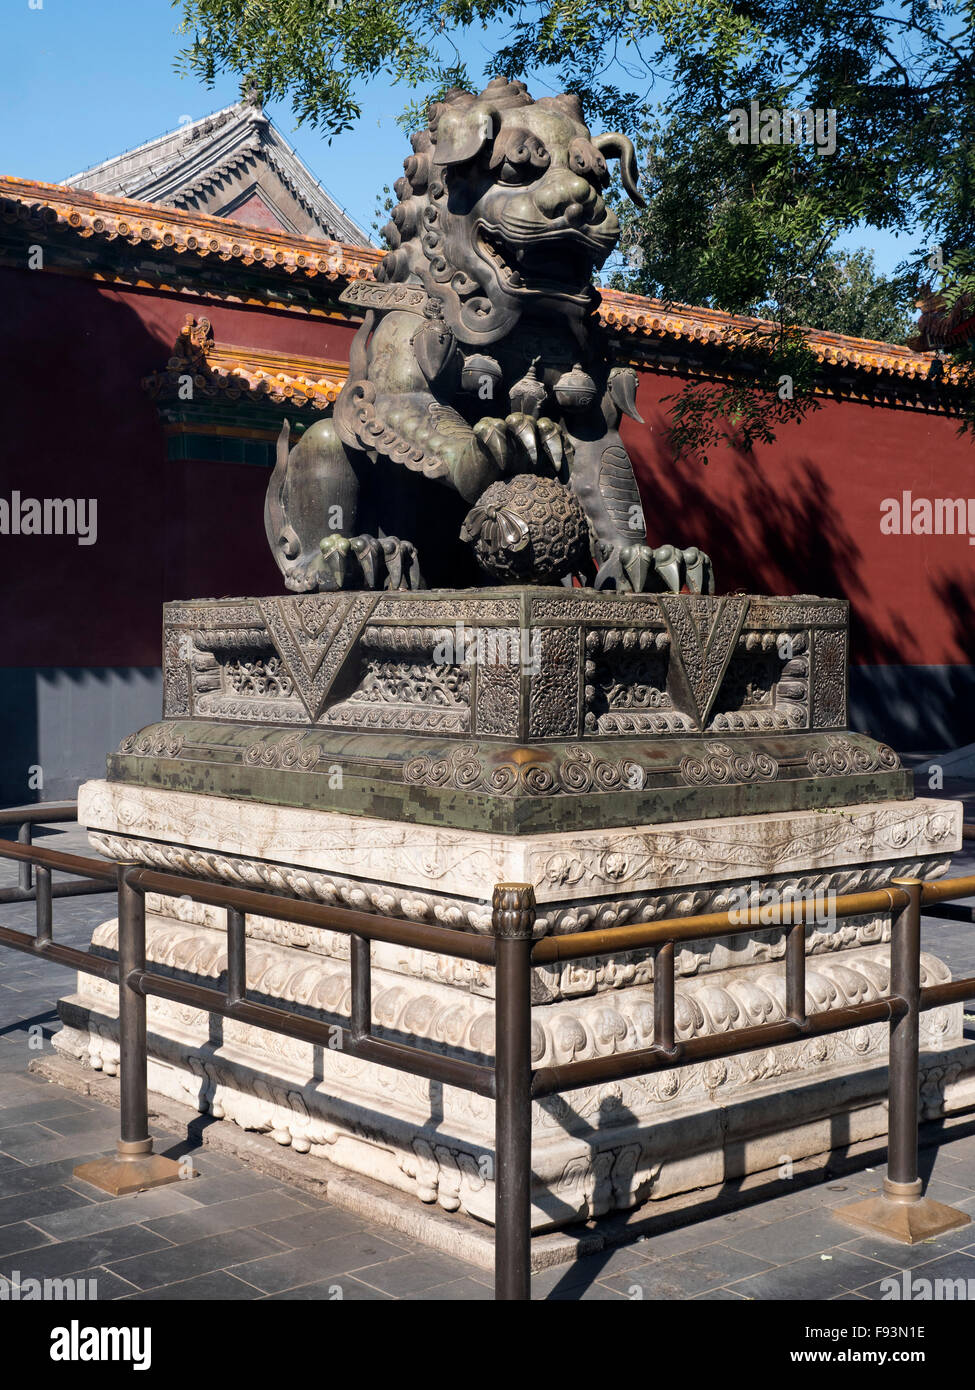 Leone di Bronzo nel tempio Lama Yonghe Gong, Pechino, Cina, Asia Foto Stock